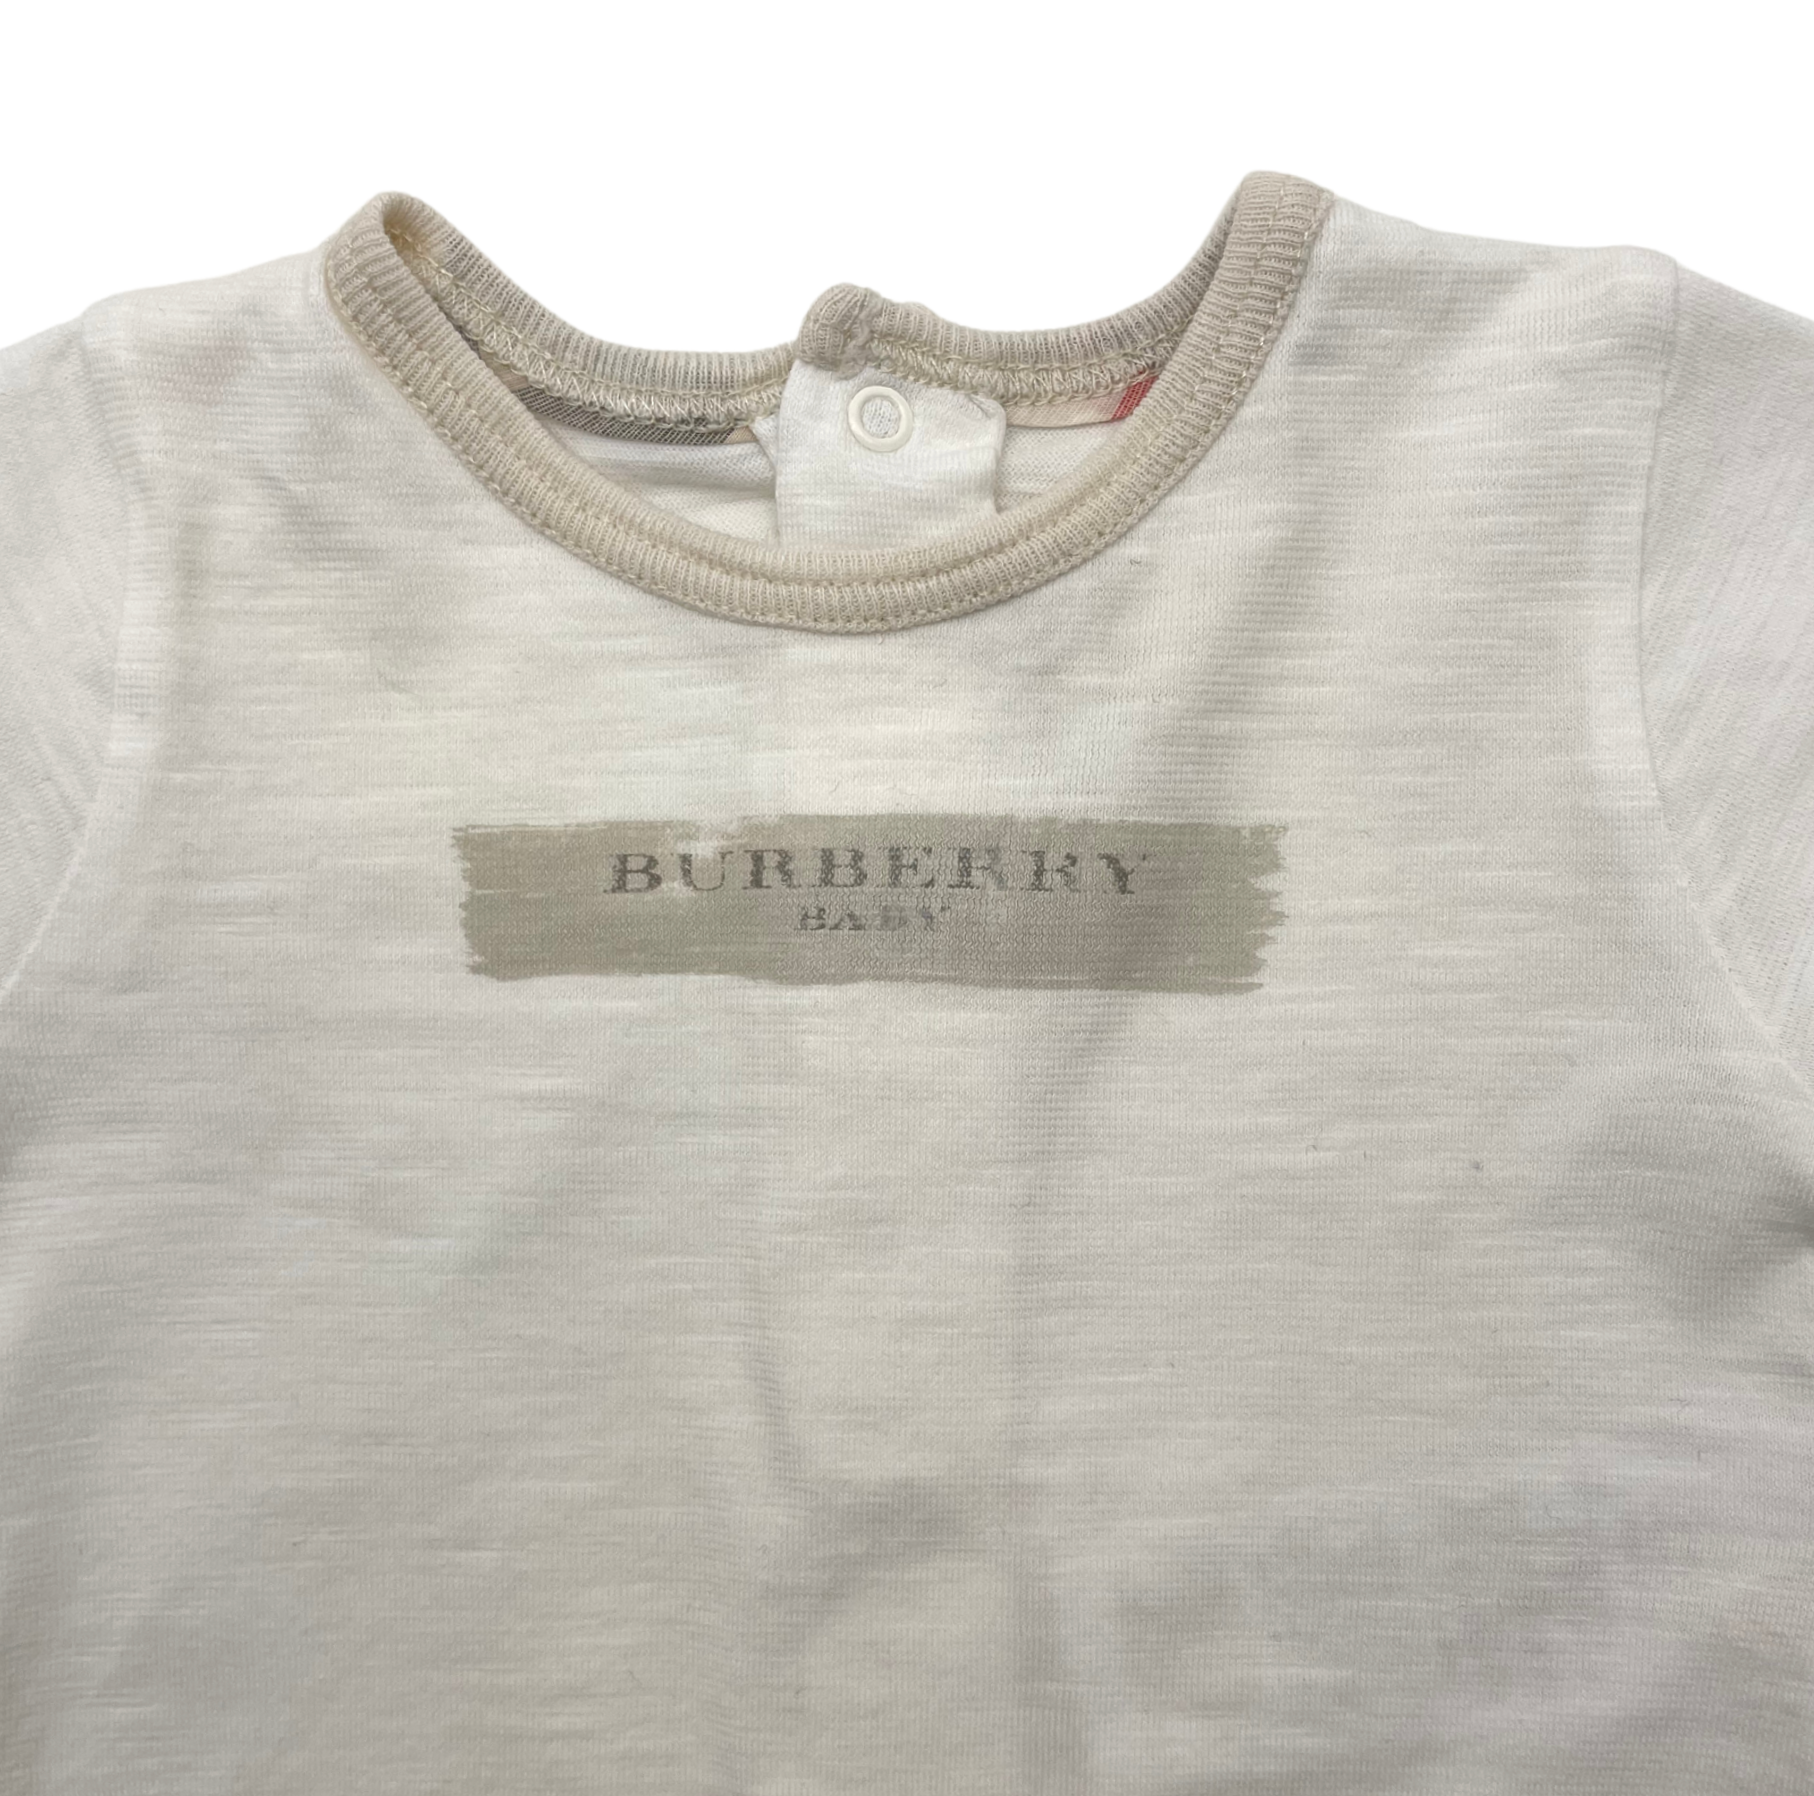 BURBERRY - T-shirt écru - 3 mois